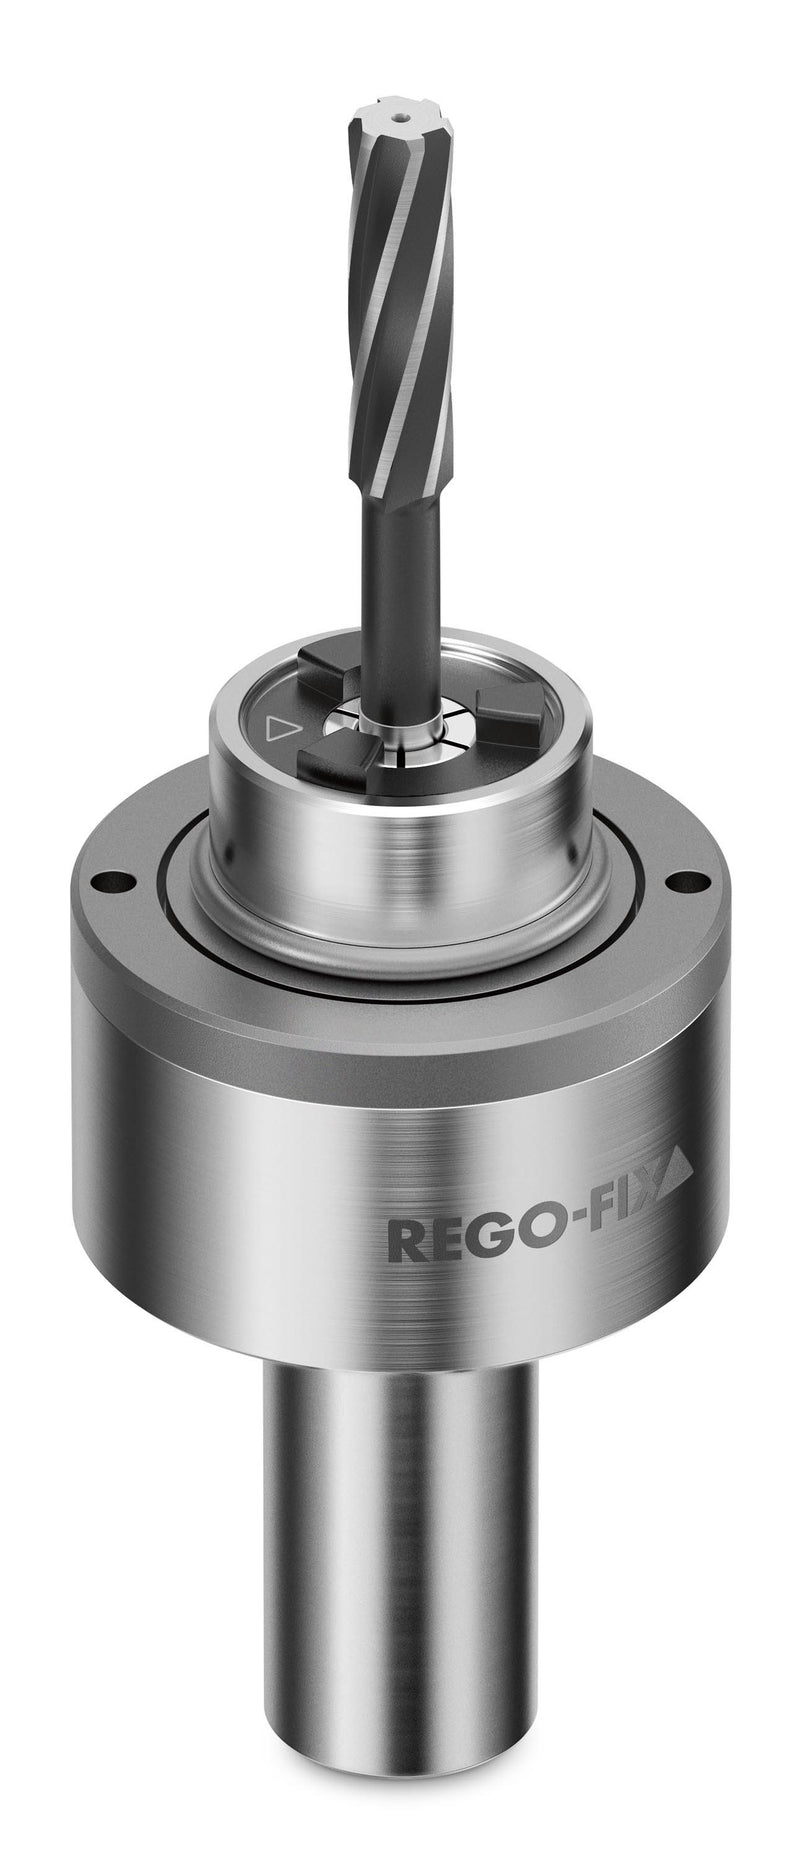 Rego-Fix PH 22 / ER 11 Tool Holder 2622.91100 (0646028)